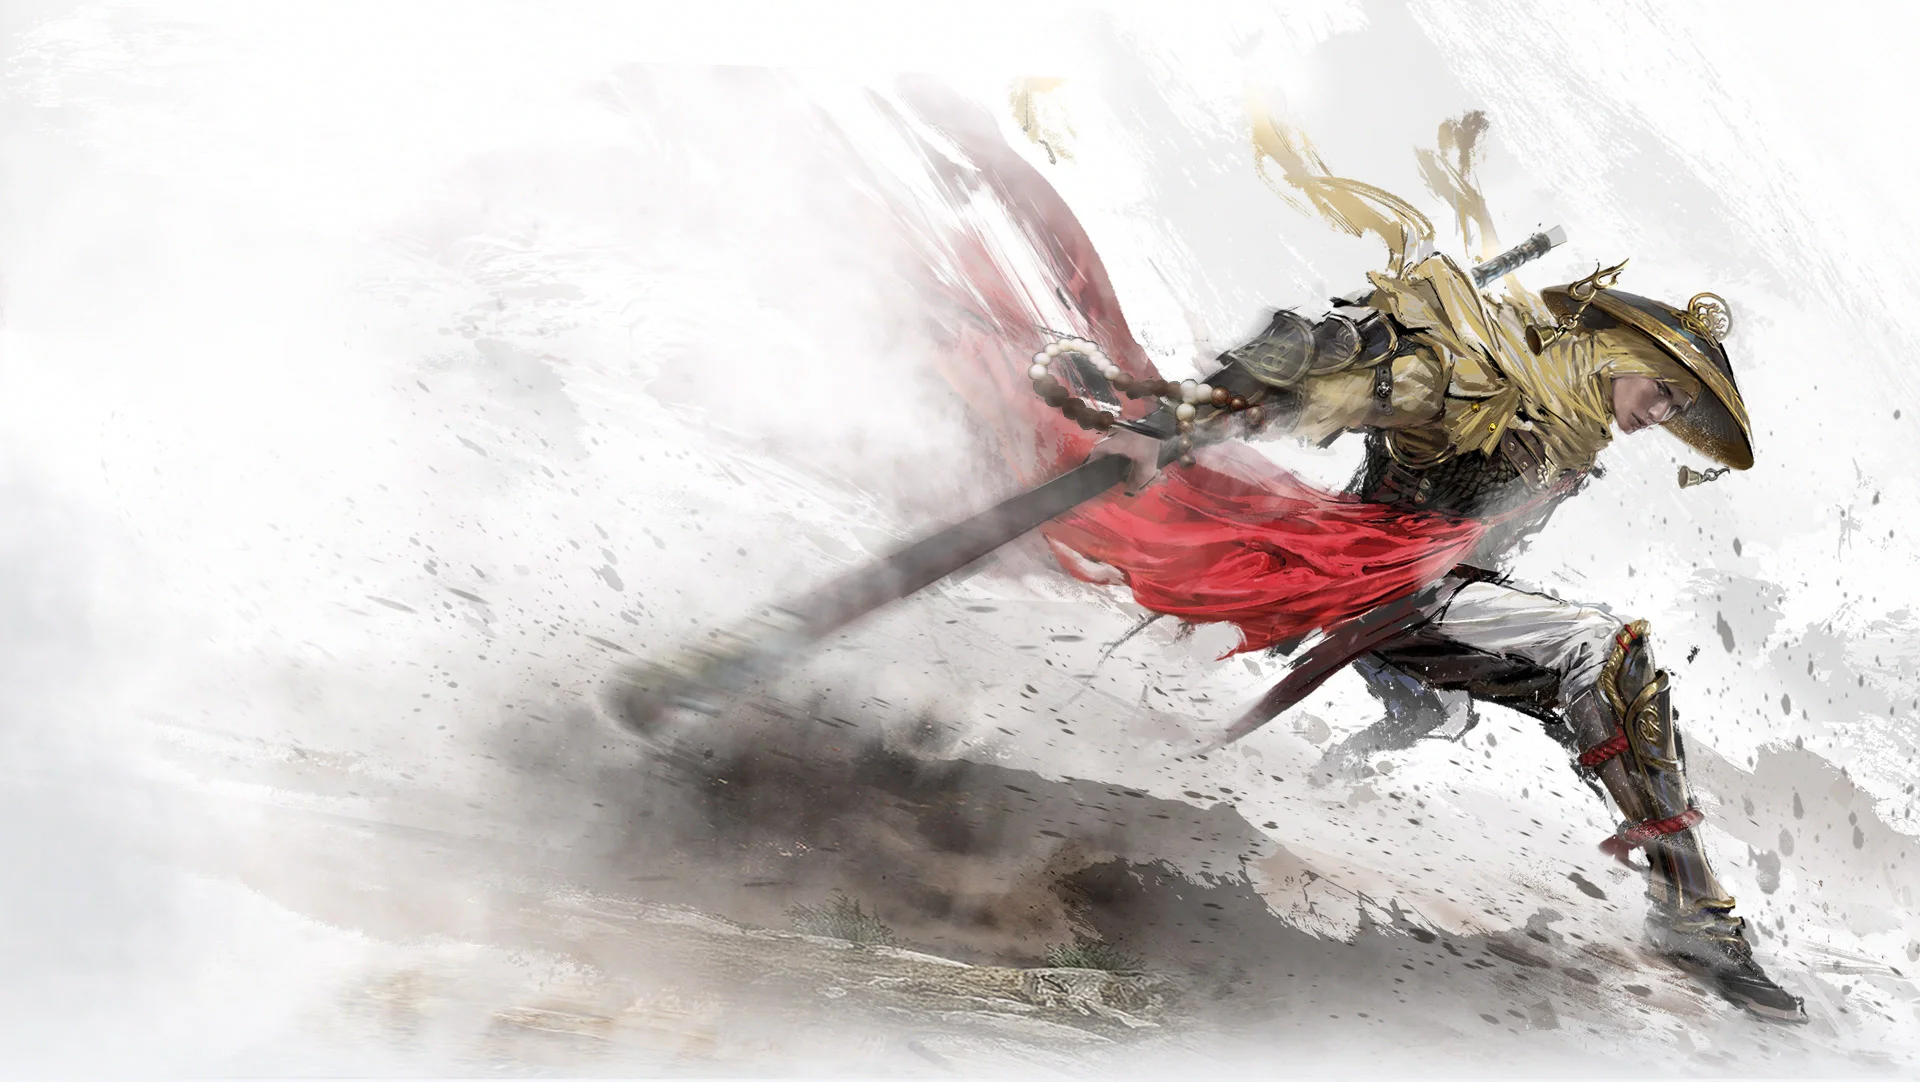 Video Game Naraka: Bladepoint HD Wallpaper | Background Image